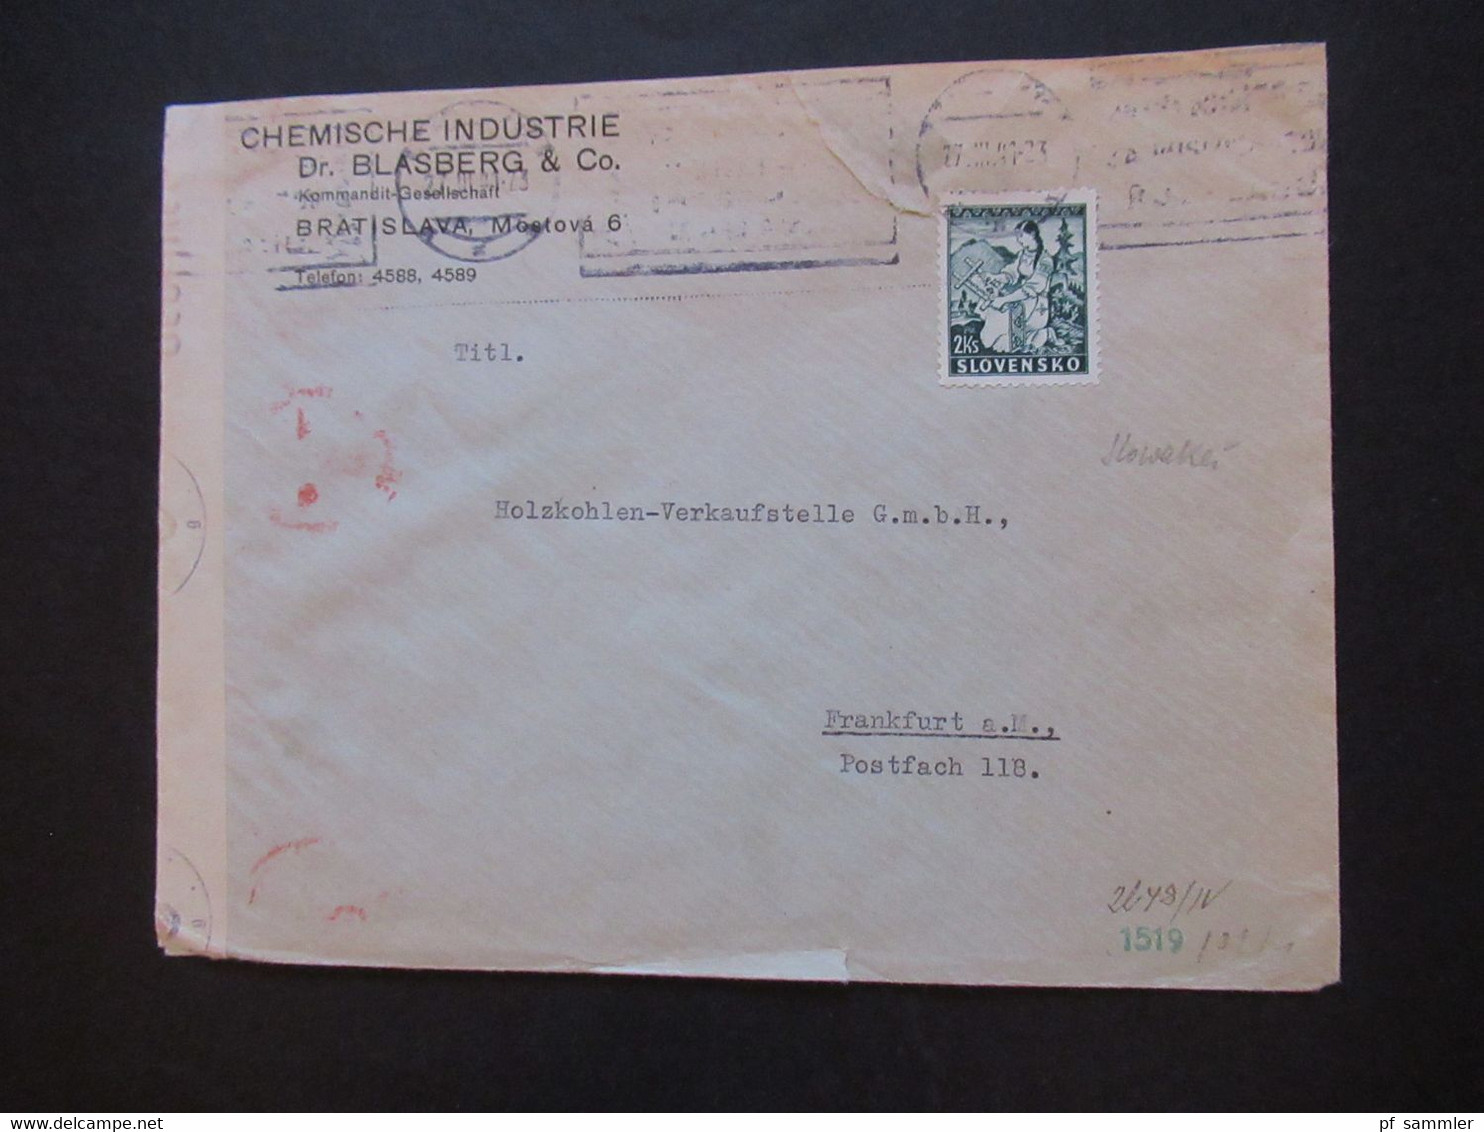 Slowakei 1941 Zensurbeleg OKW Mehrfachzensur Firmenumschlag Chemische Industrie Dr. Blasberg Bratislava - Covers & Documents